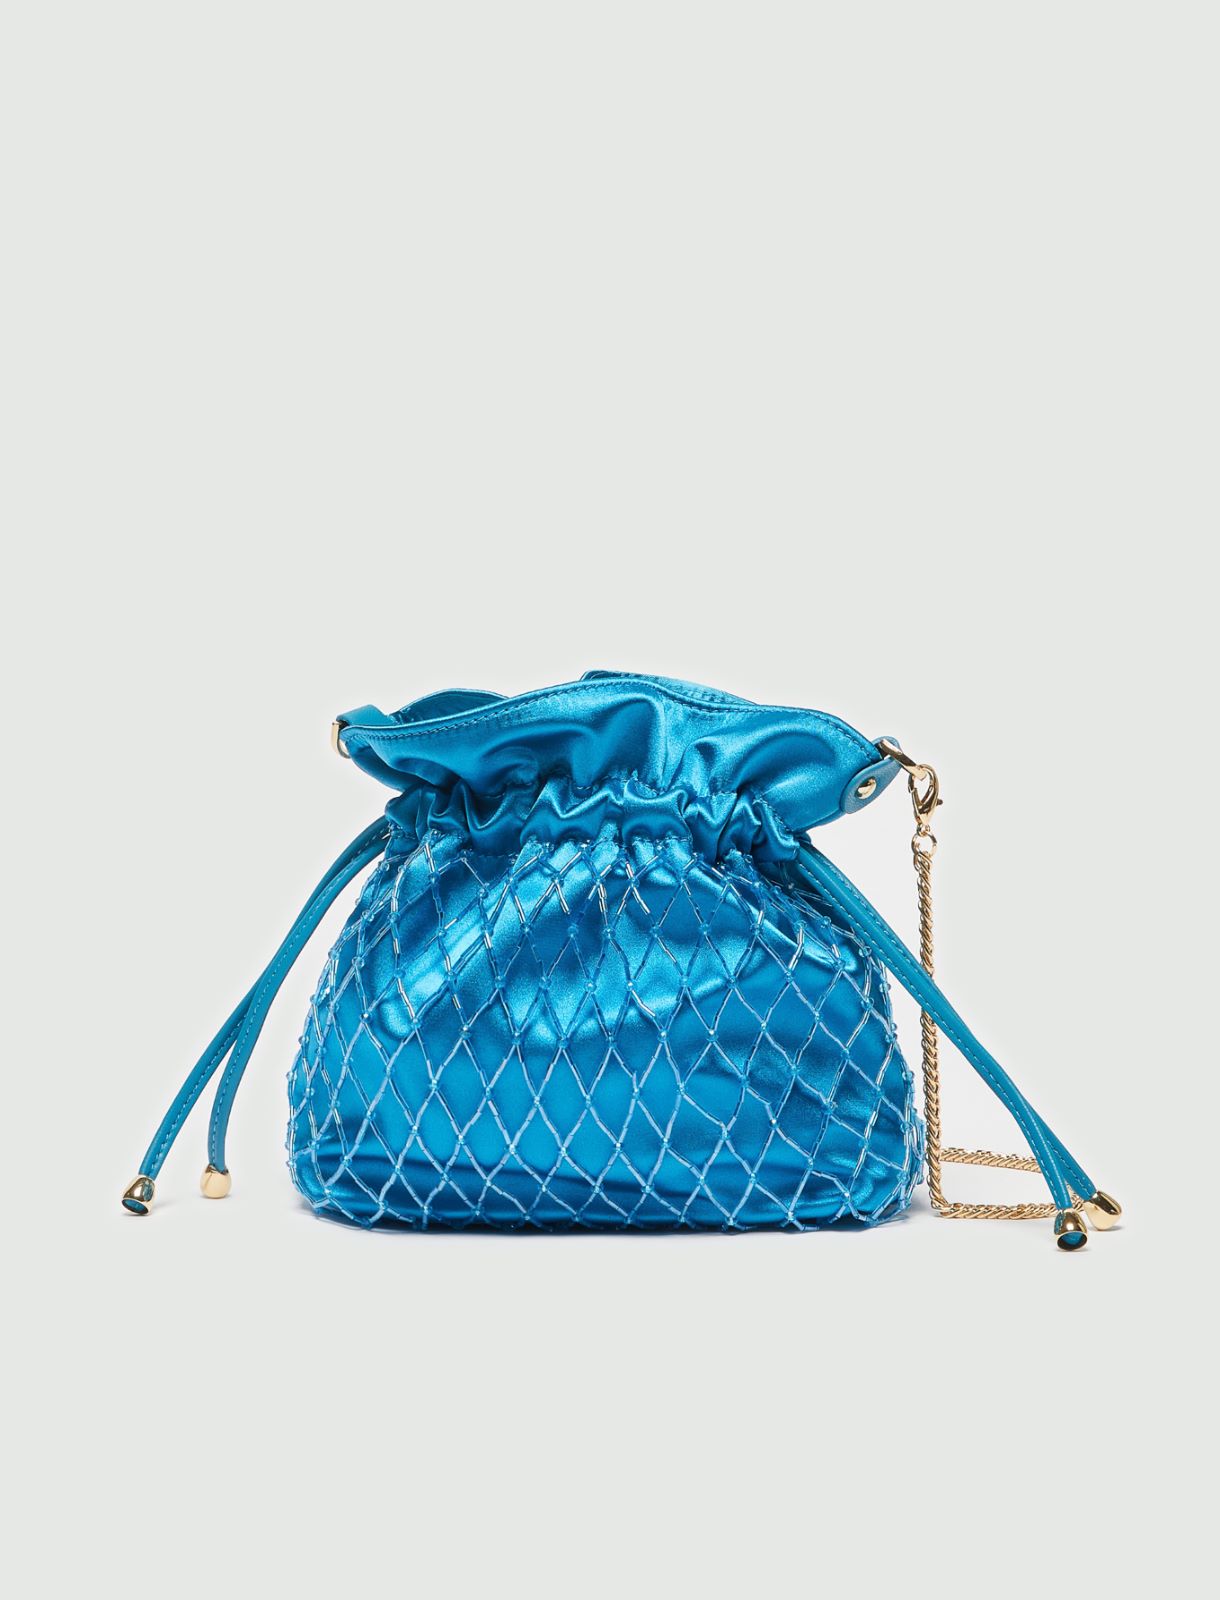 Mesh bag - Turquoise - Marella - 2